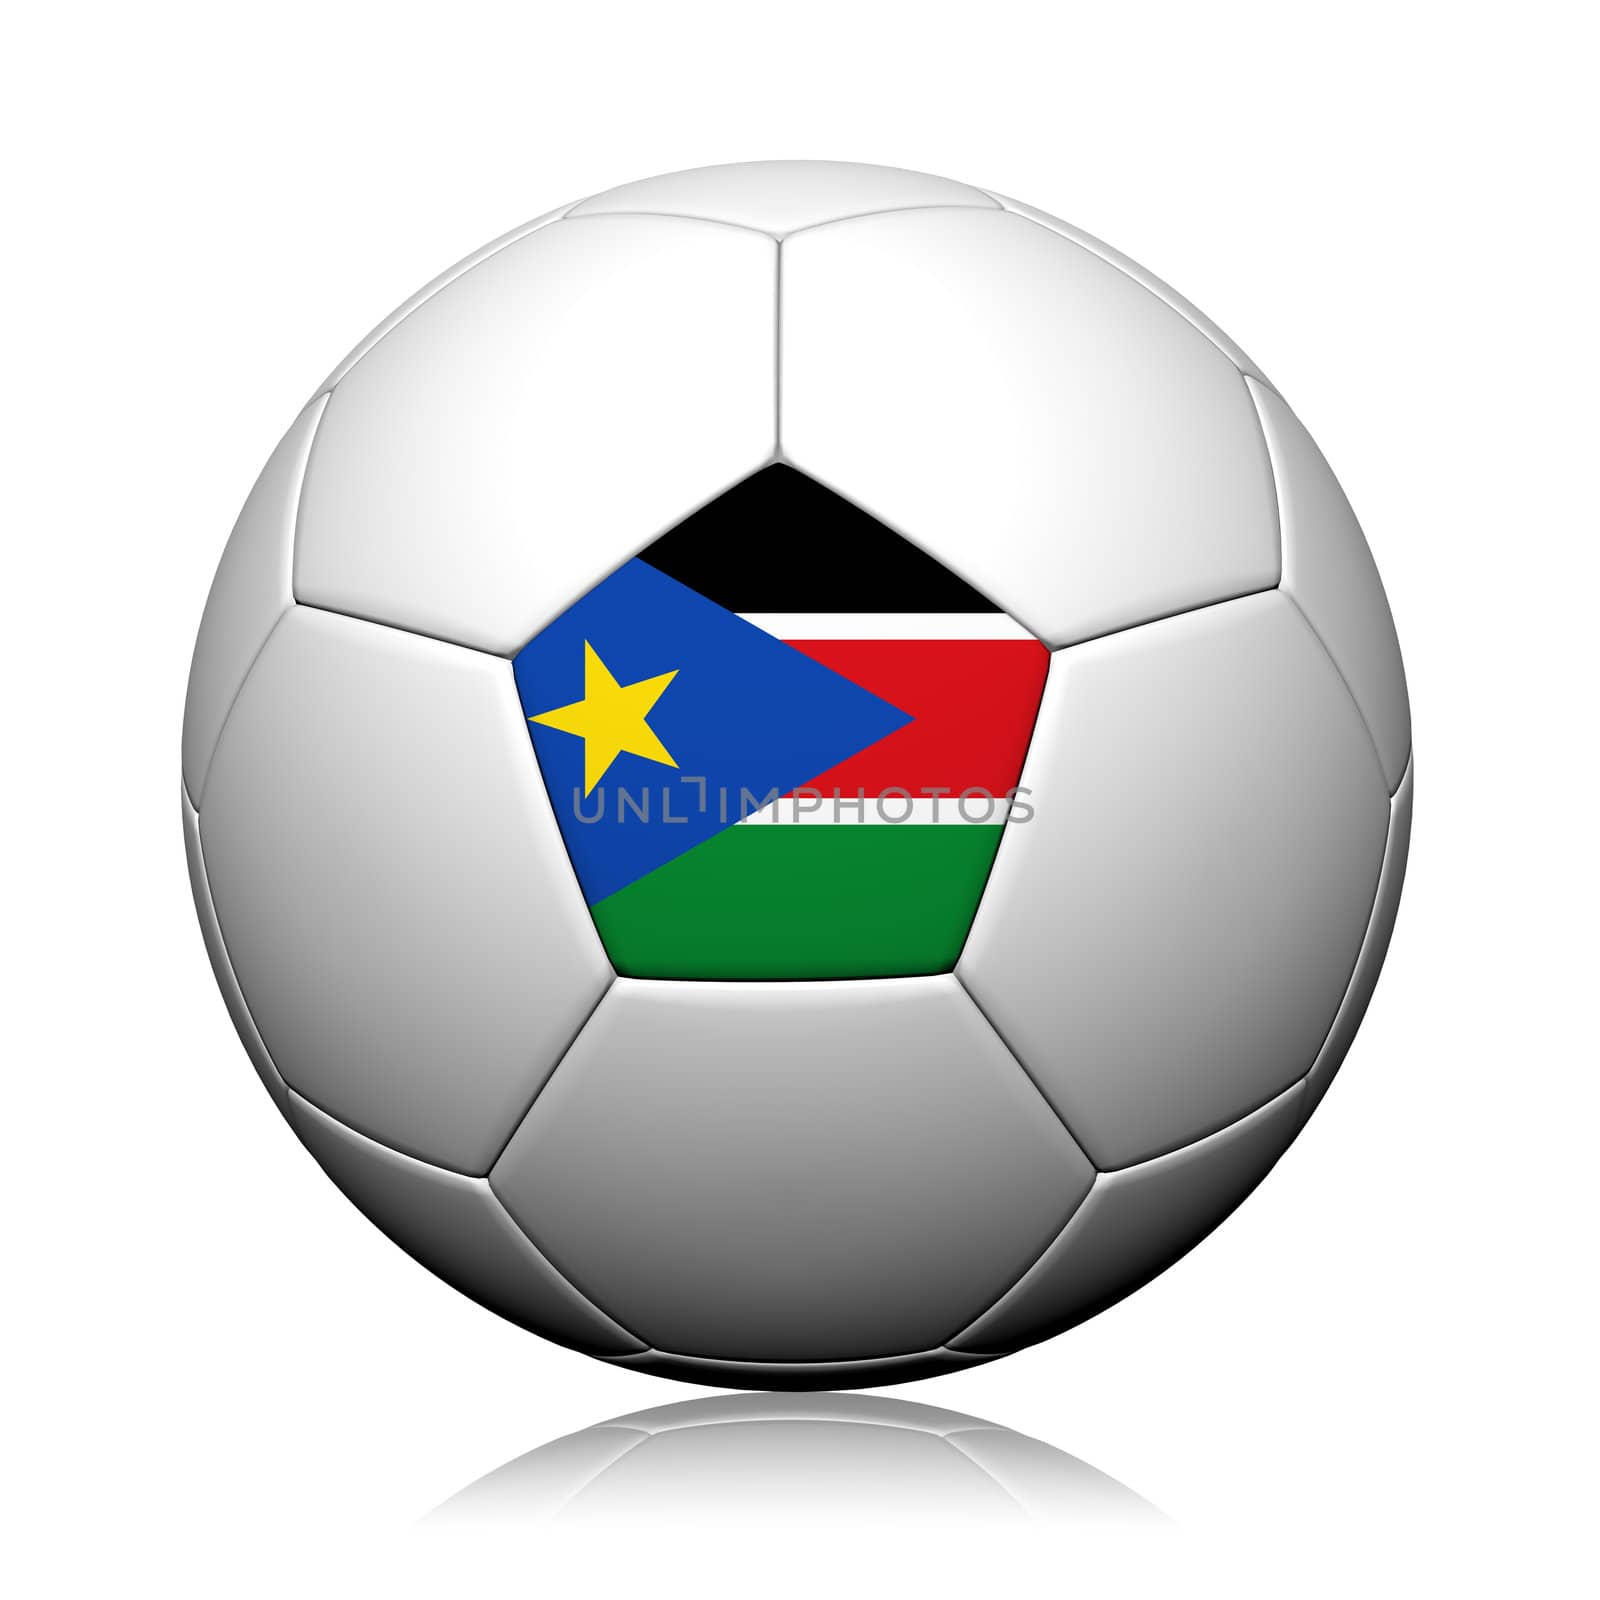 Sudan Flag Pattern 3d rendering of a soccer ball